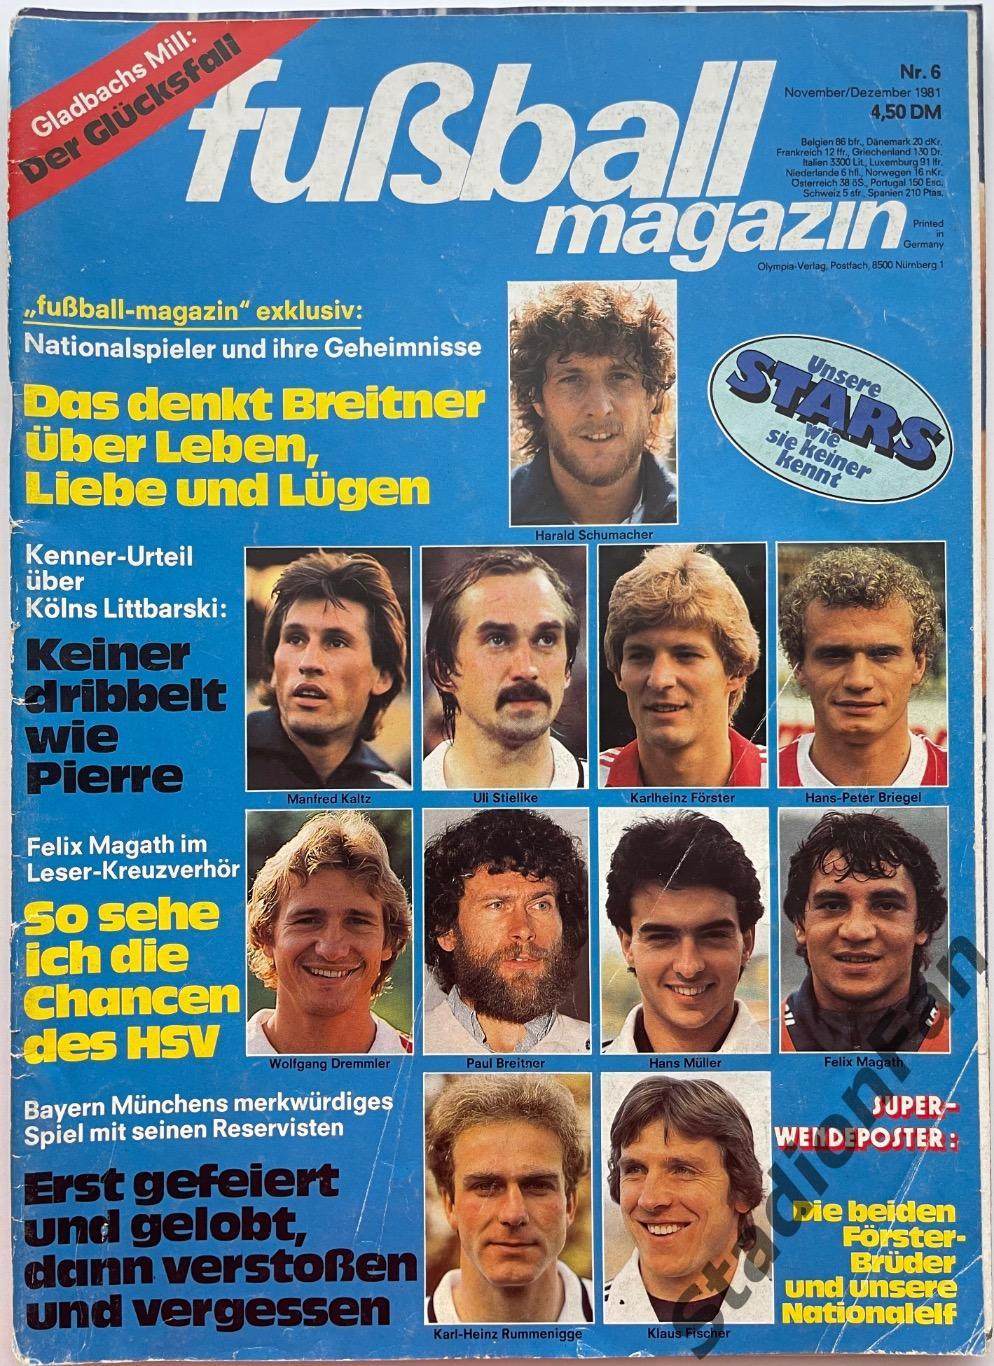 Журнал Fussball magazin nr.6 - 1981 год.